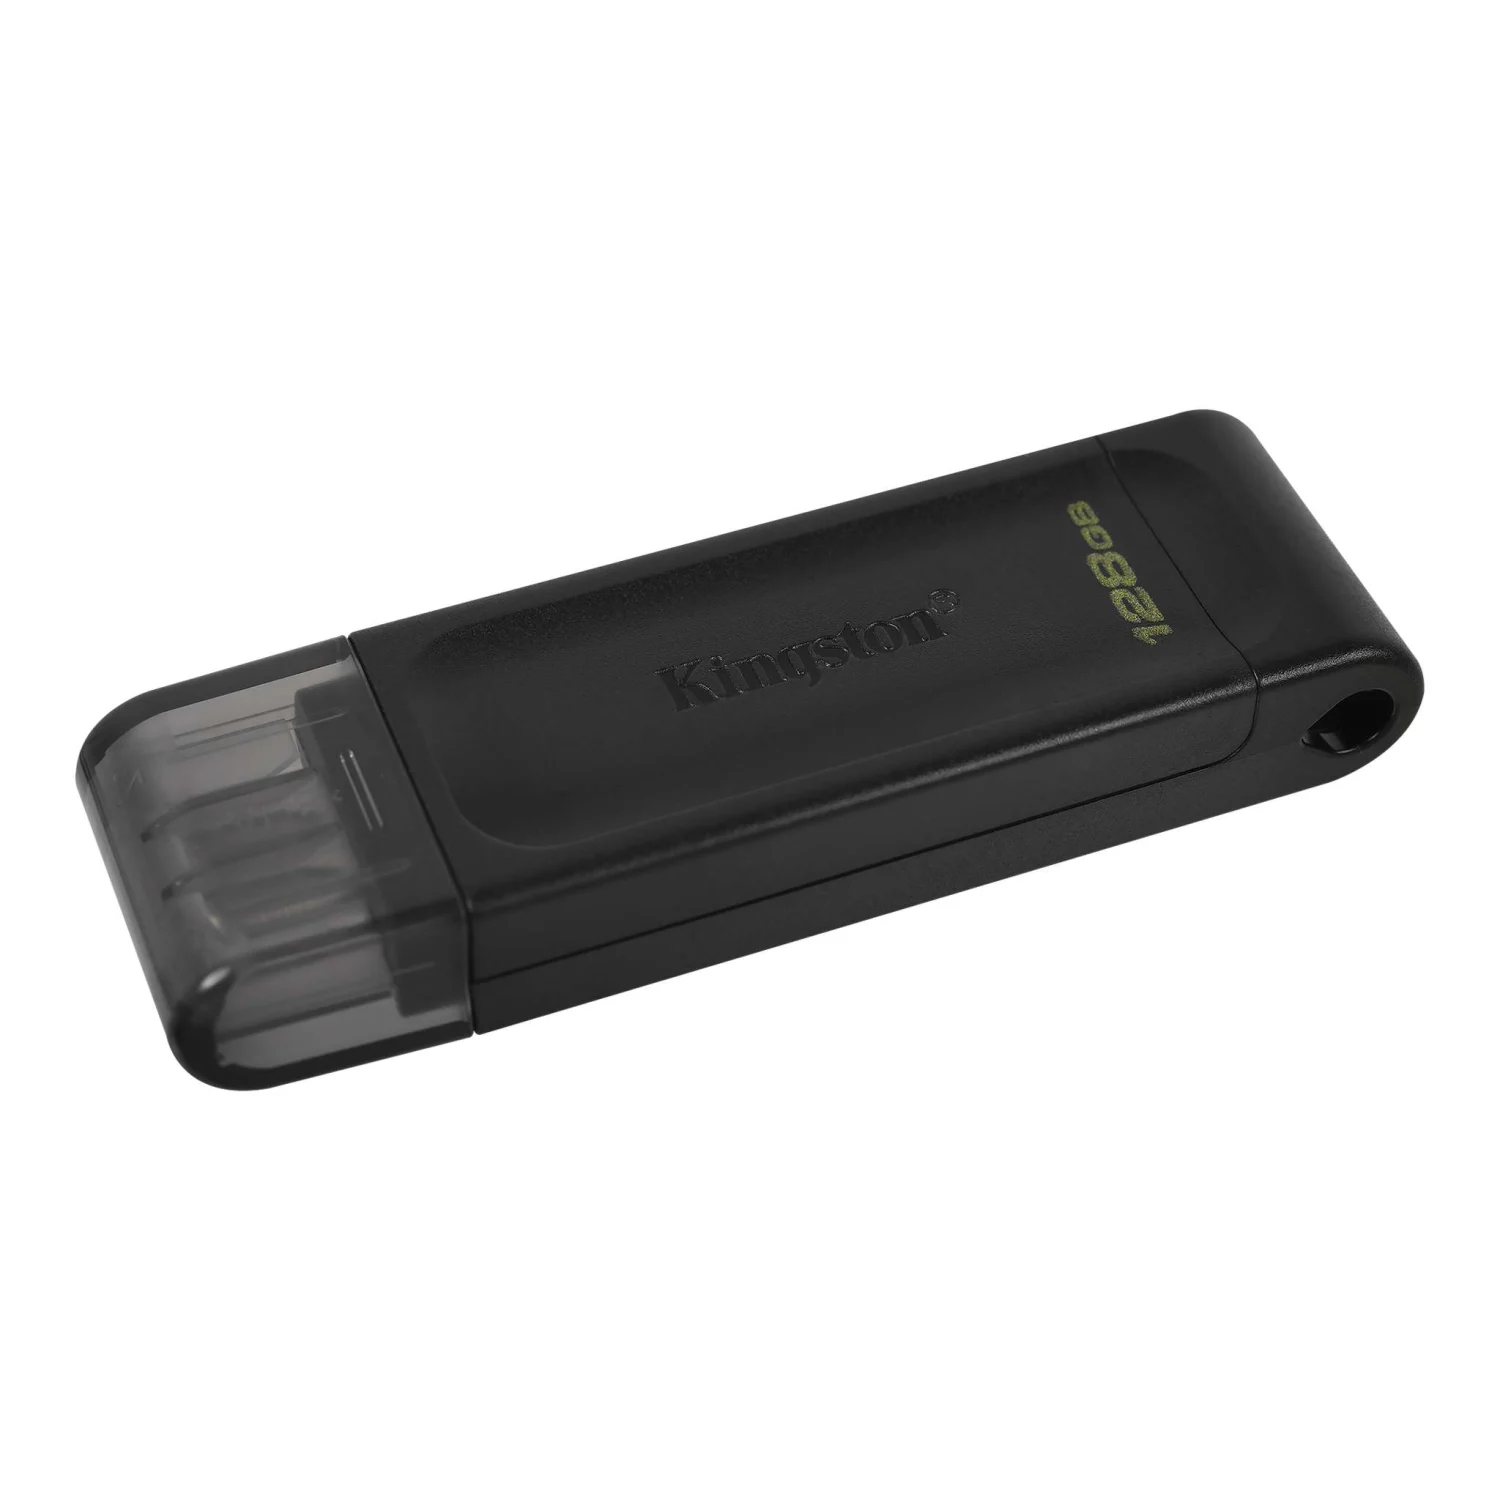 Pendrive Kingston DataTraveler 70 128GB USB-C/USB 3.0 - DT70/128GB